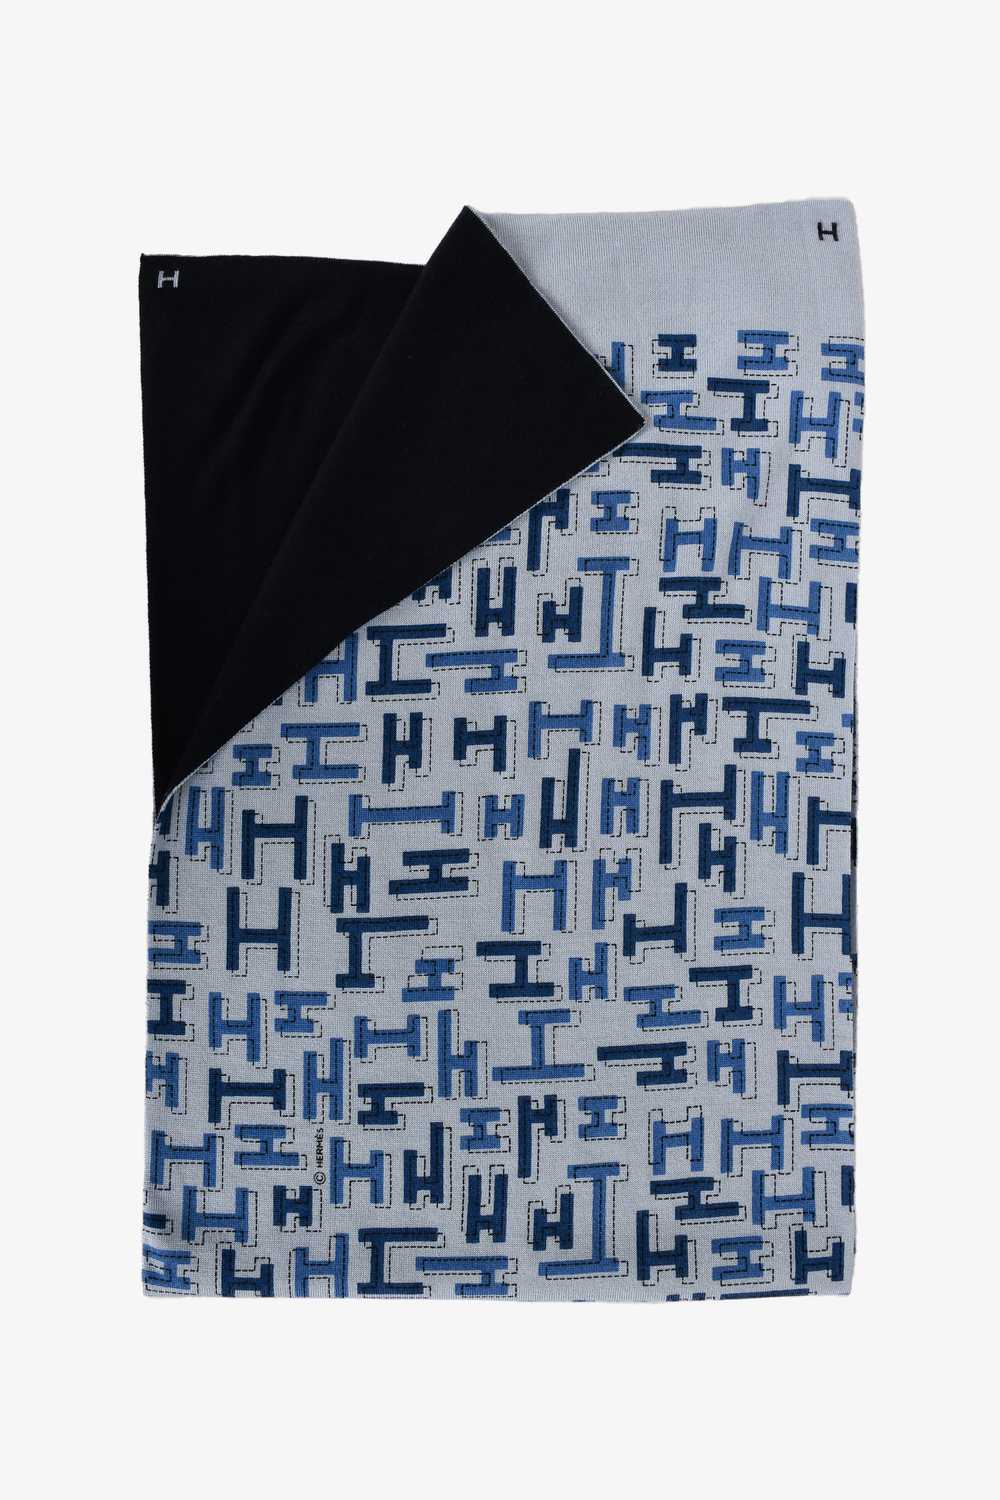 Hermès Blue Cashmere/Silk 'H' Rectangle Scarf - image 2